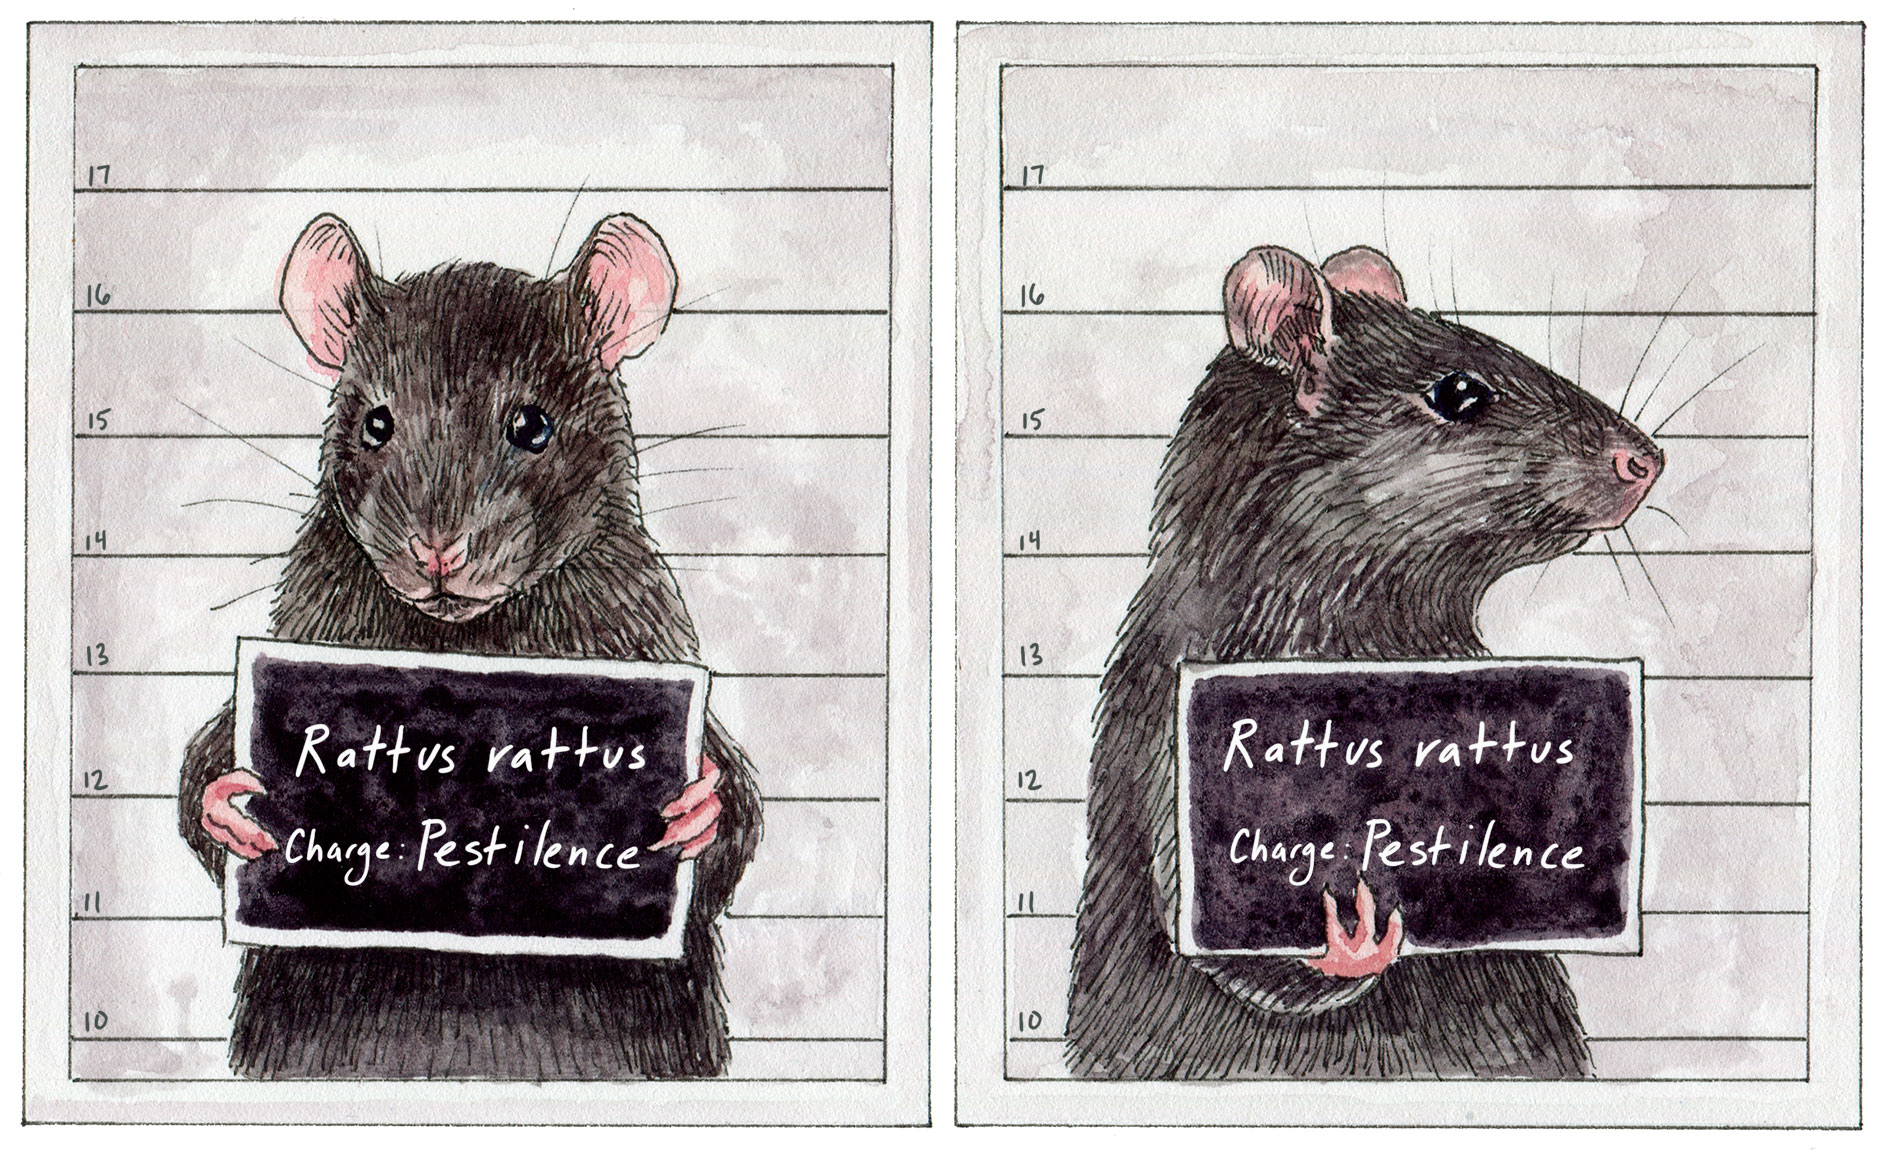 In Defense of the Rat